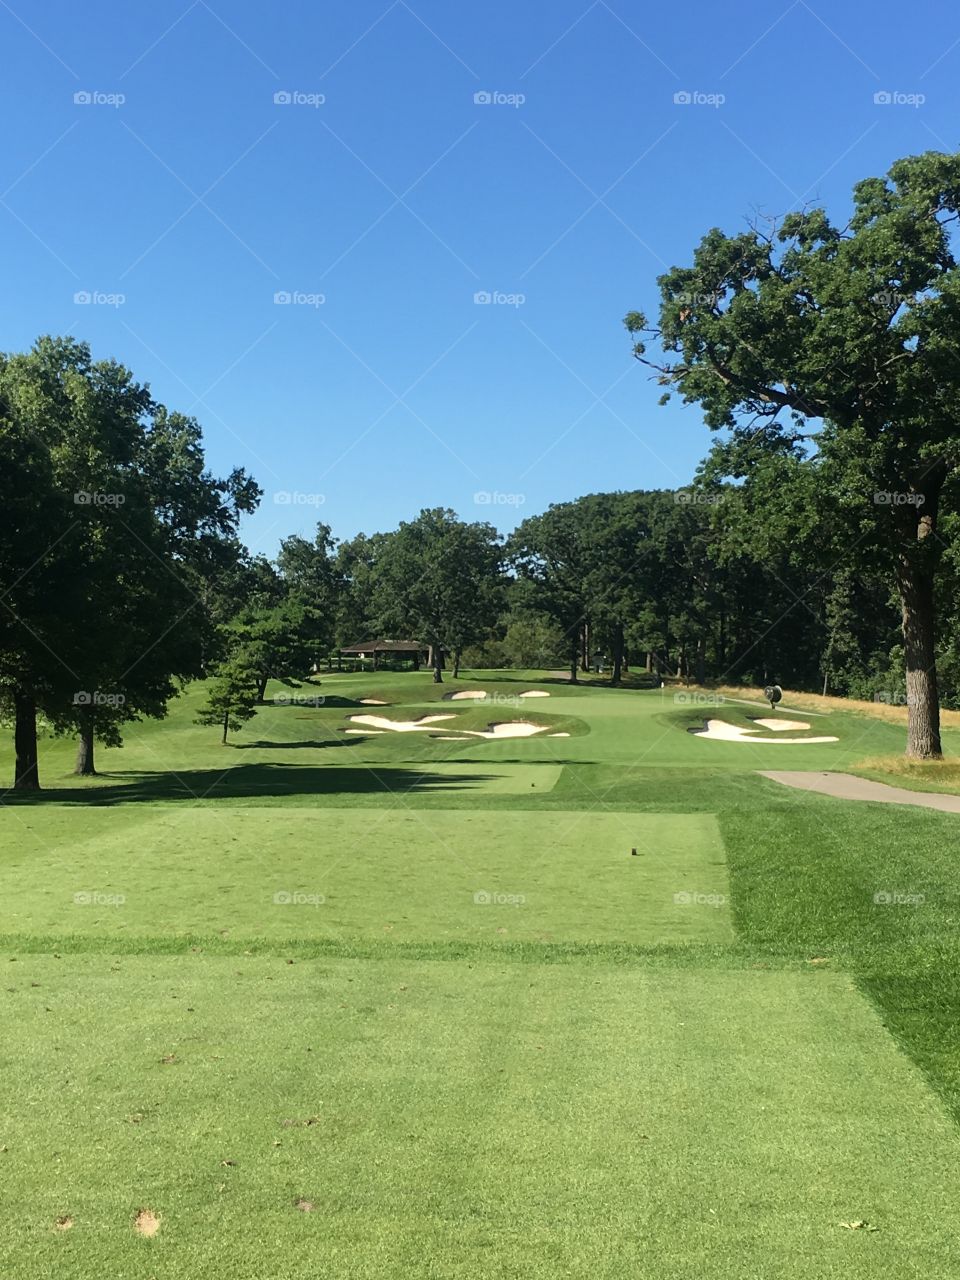 Chicago area golf course 